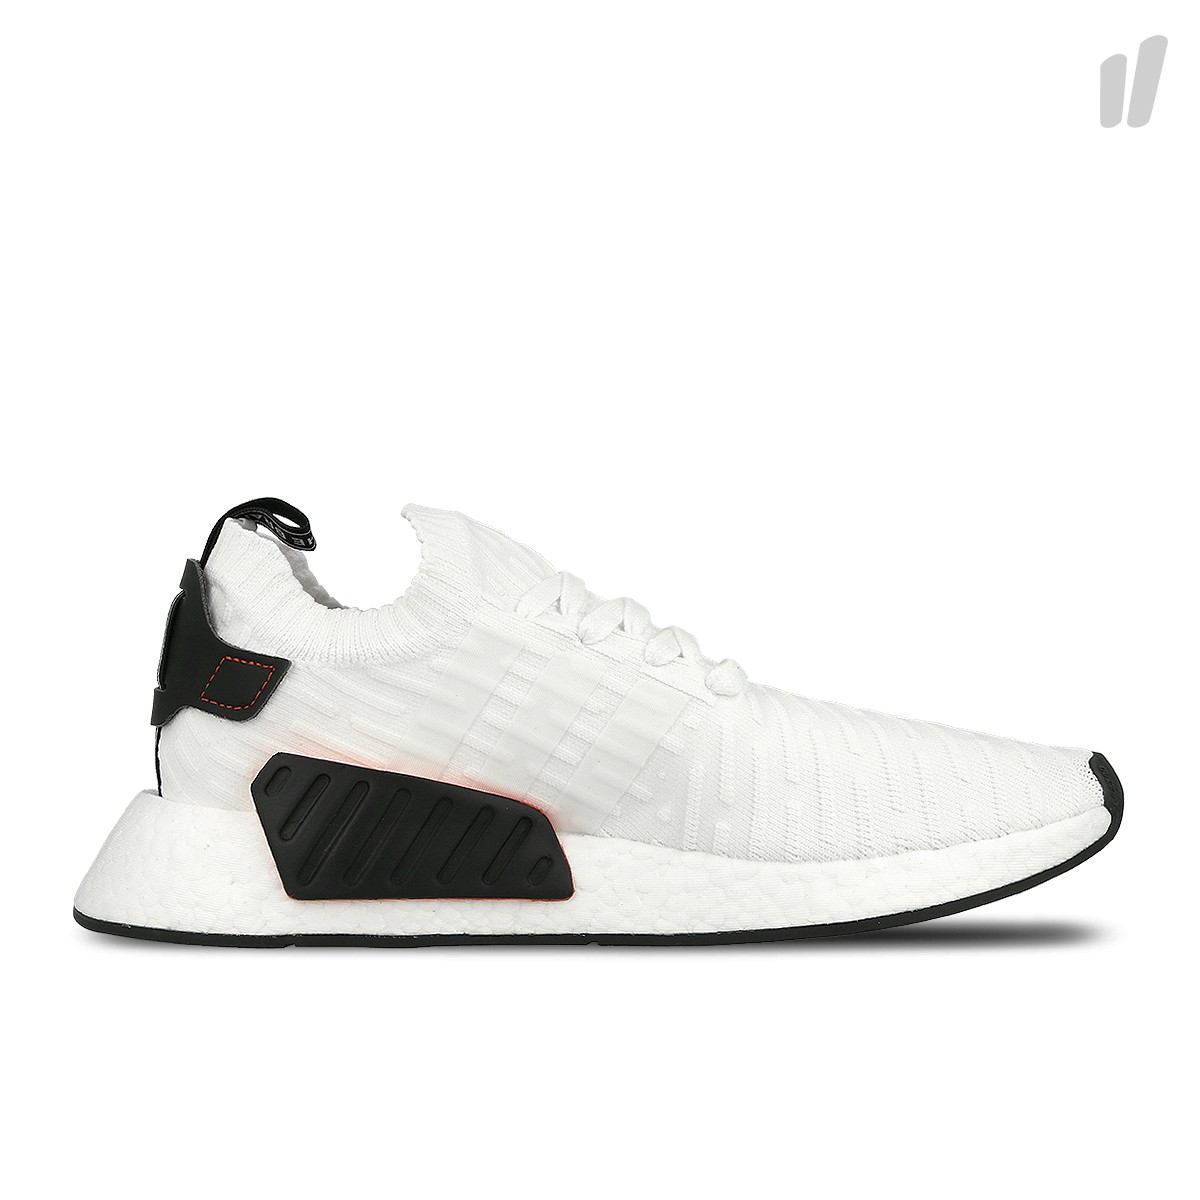 Adidas NMD_R2 Primeknit
Footwear White / Core Black